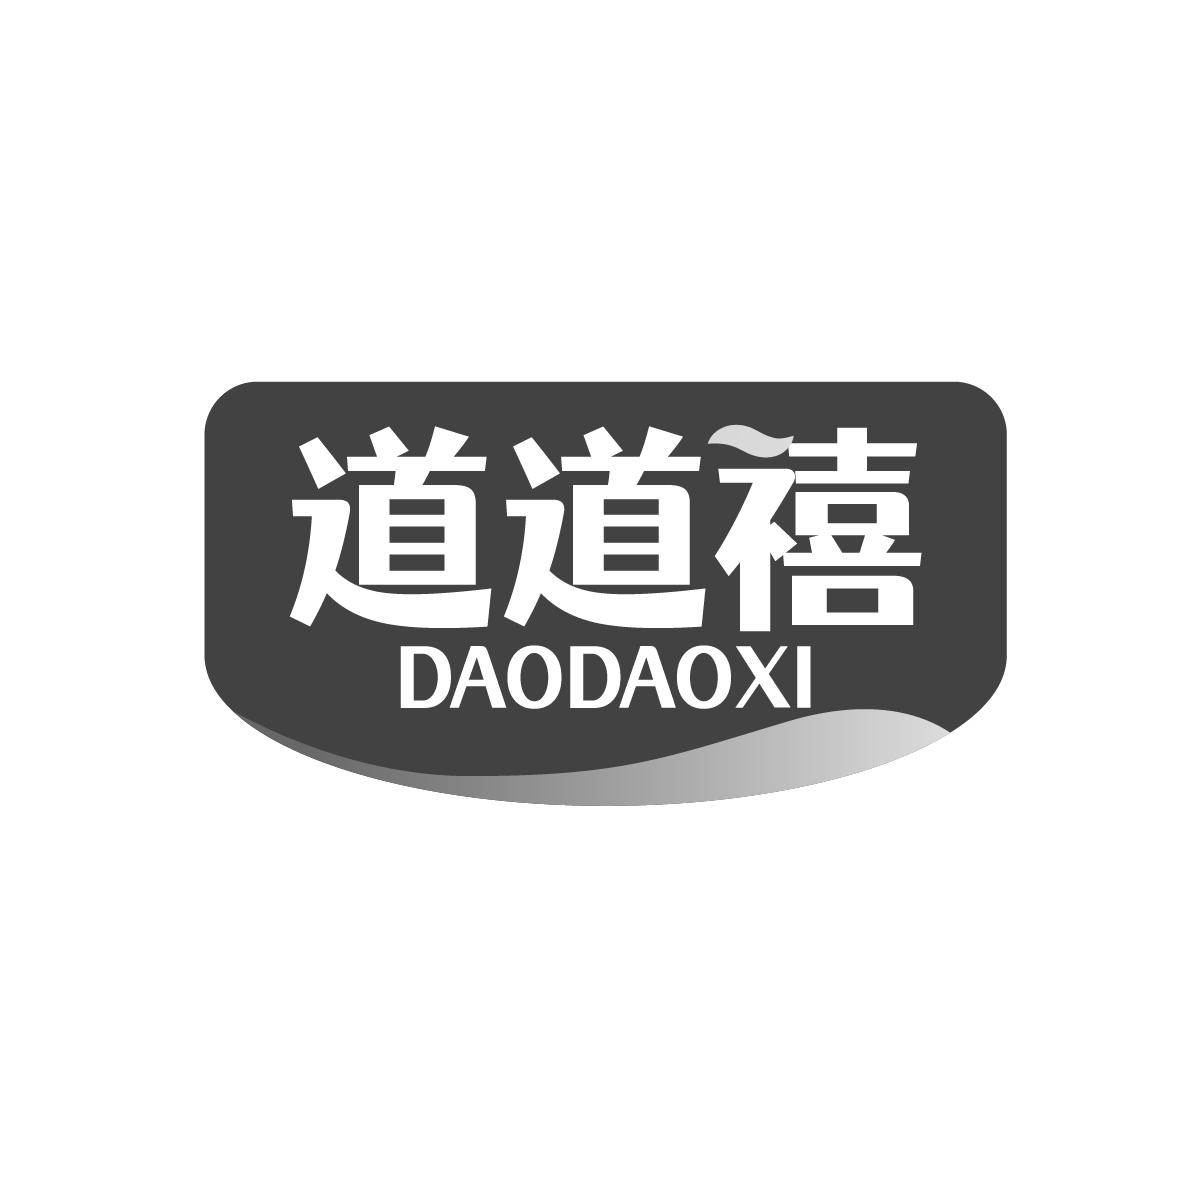 道道禧 DAODAOXI